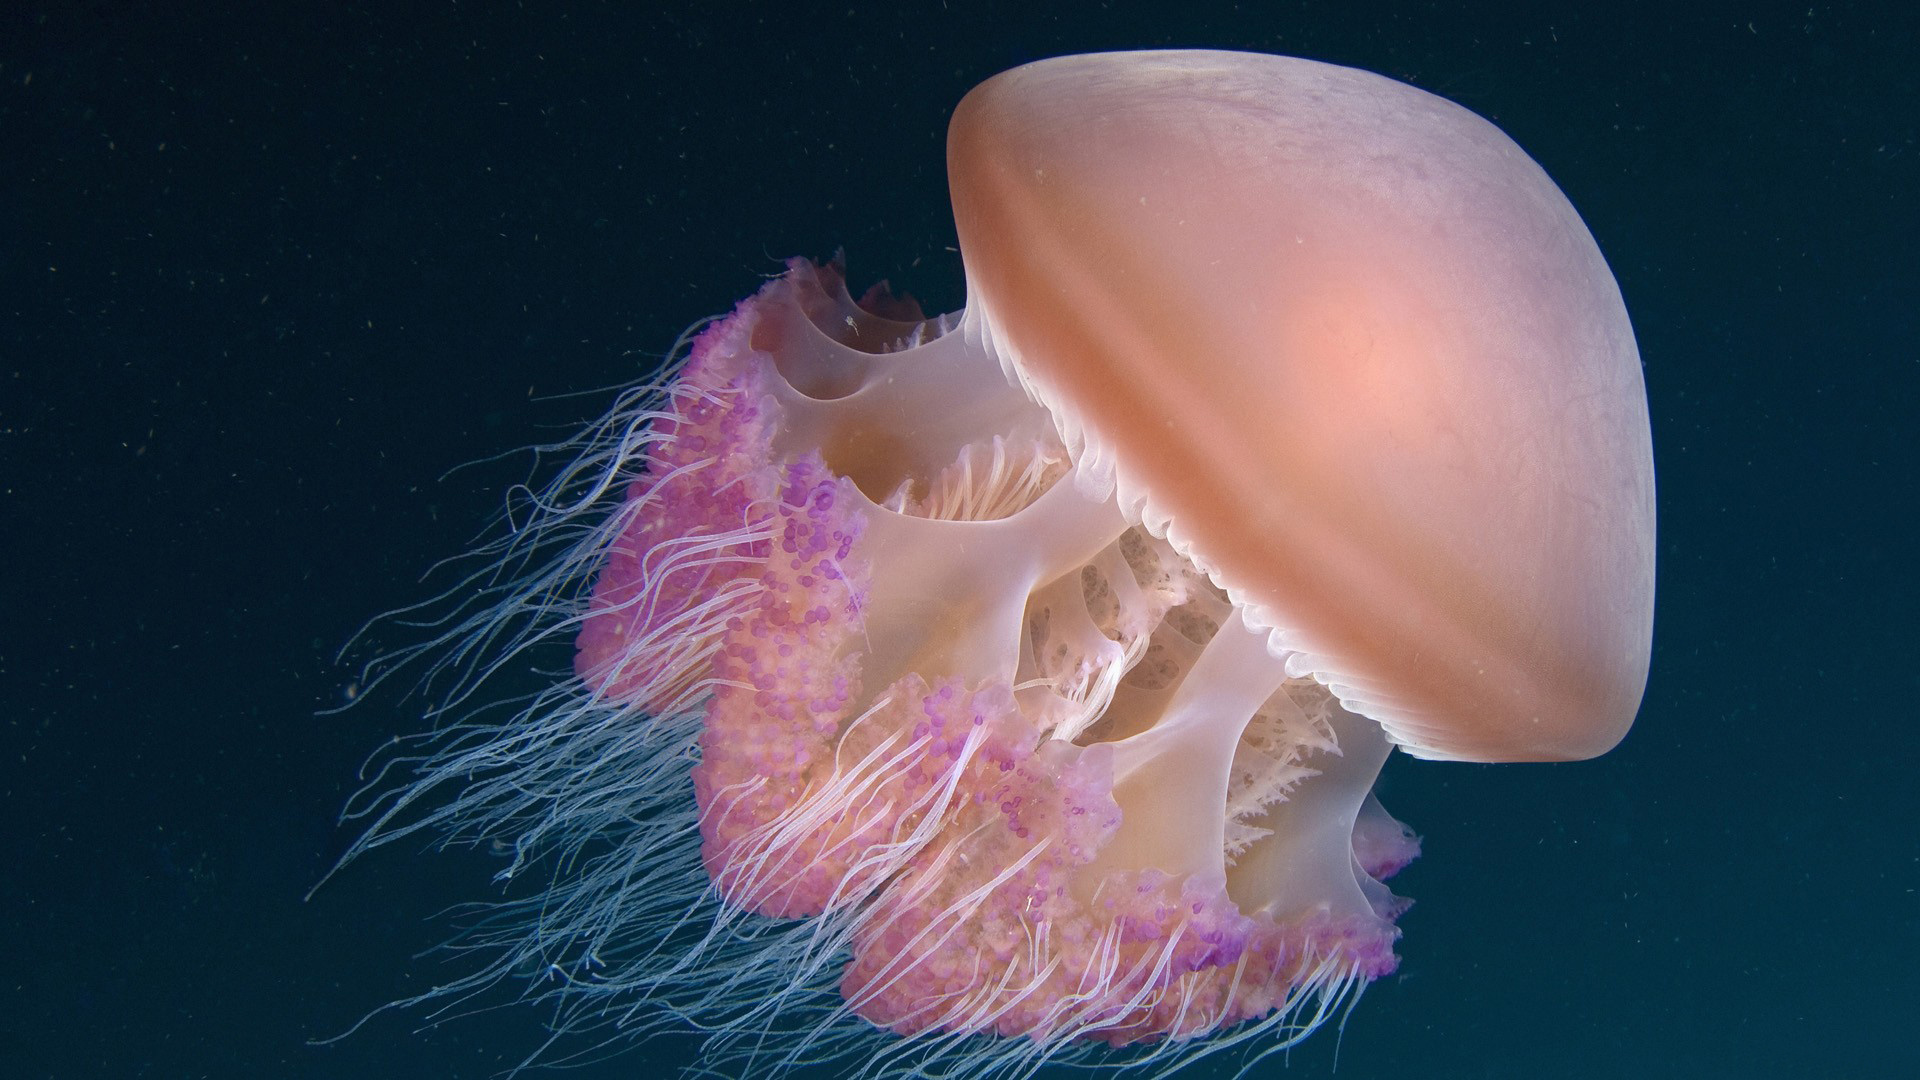 Ocean Hd Live Hd Wallpaper Free Download - Jellyfish Under The Sea - HD Wallpaper 